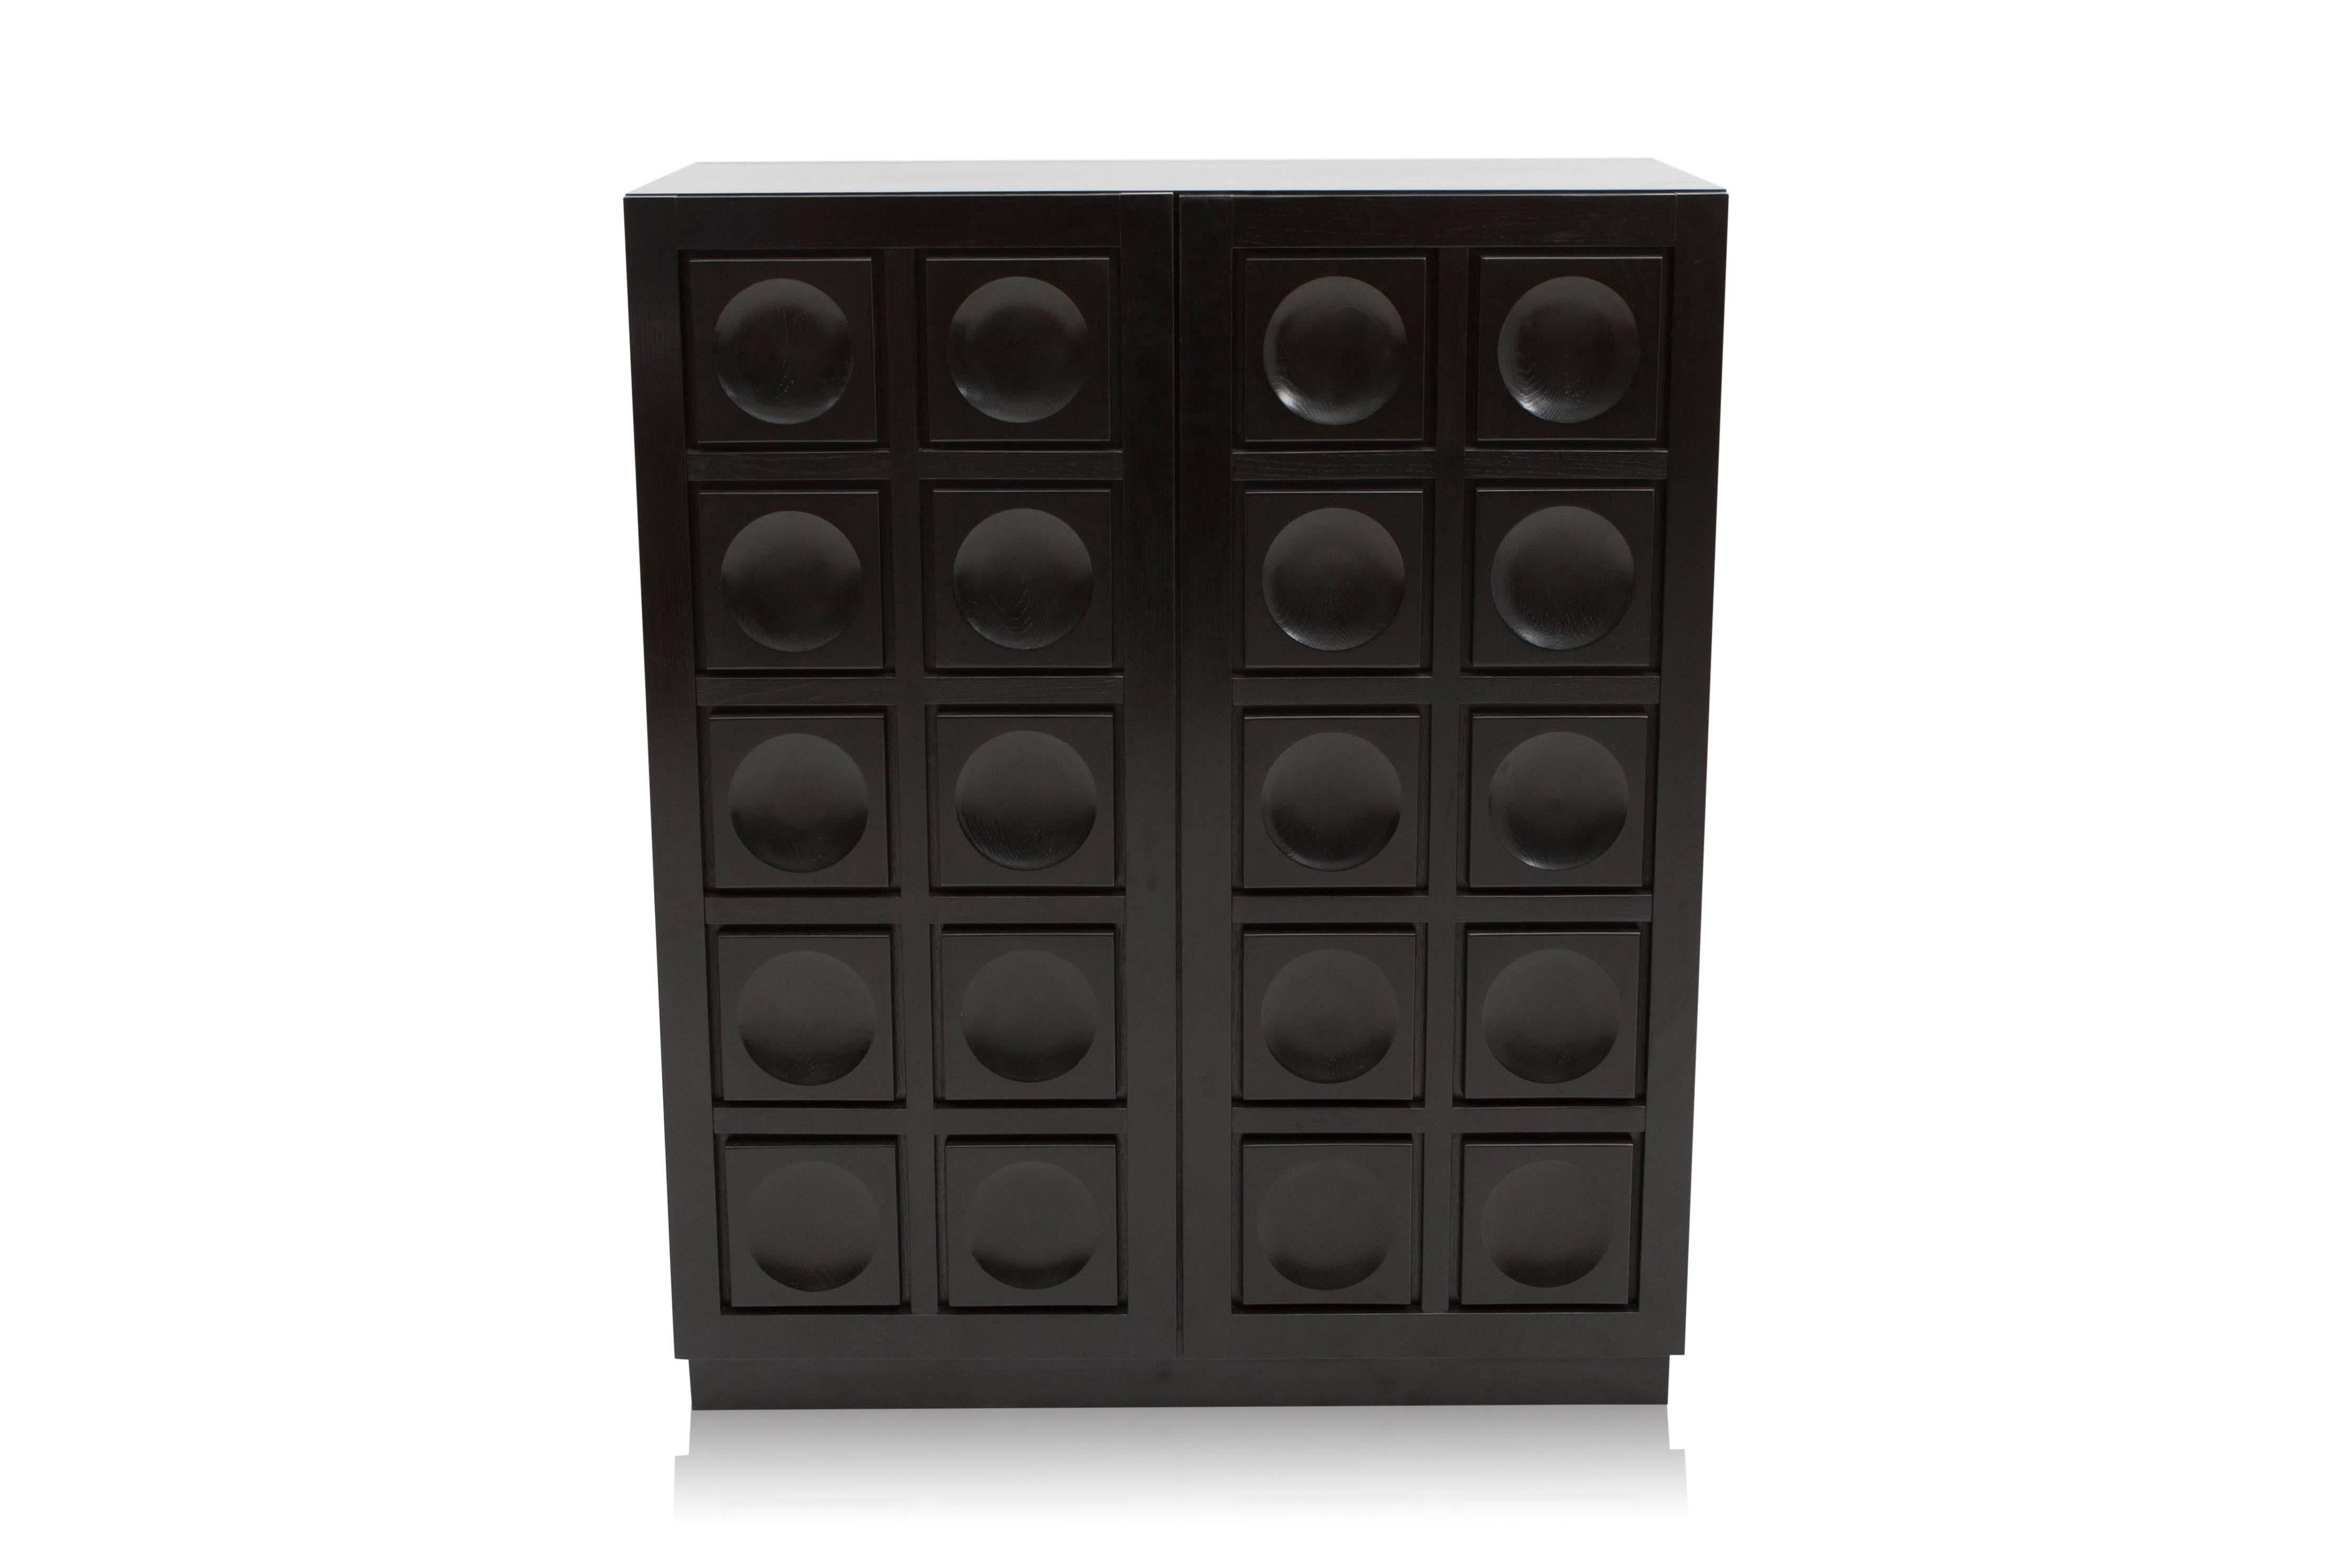 Black Brutalist bar cabinet
Two door buffet with graphical door panels.
In ebonized oak, dry bar with bottle holder.

Belgium, 1970s.

Measures: L 110 cm, H 134 cm, D 45 cm.